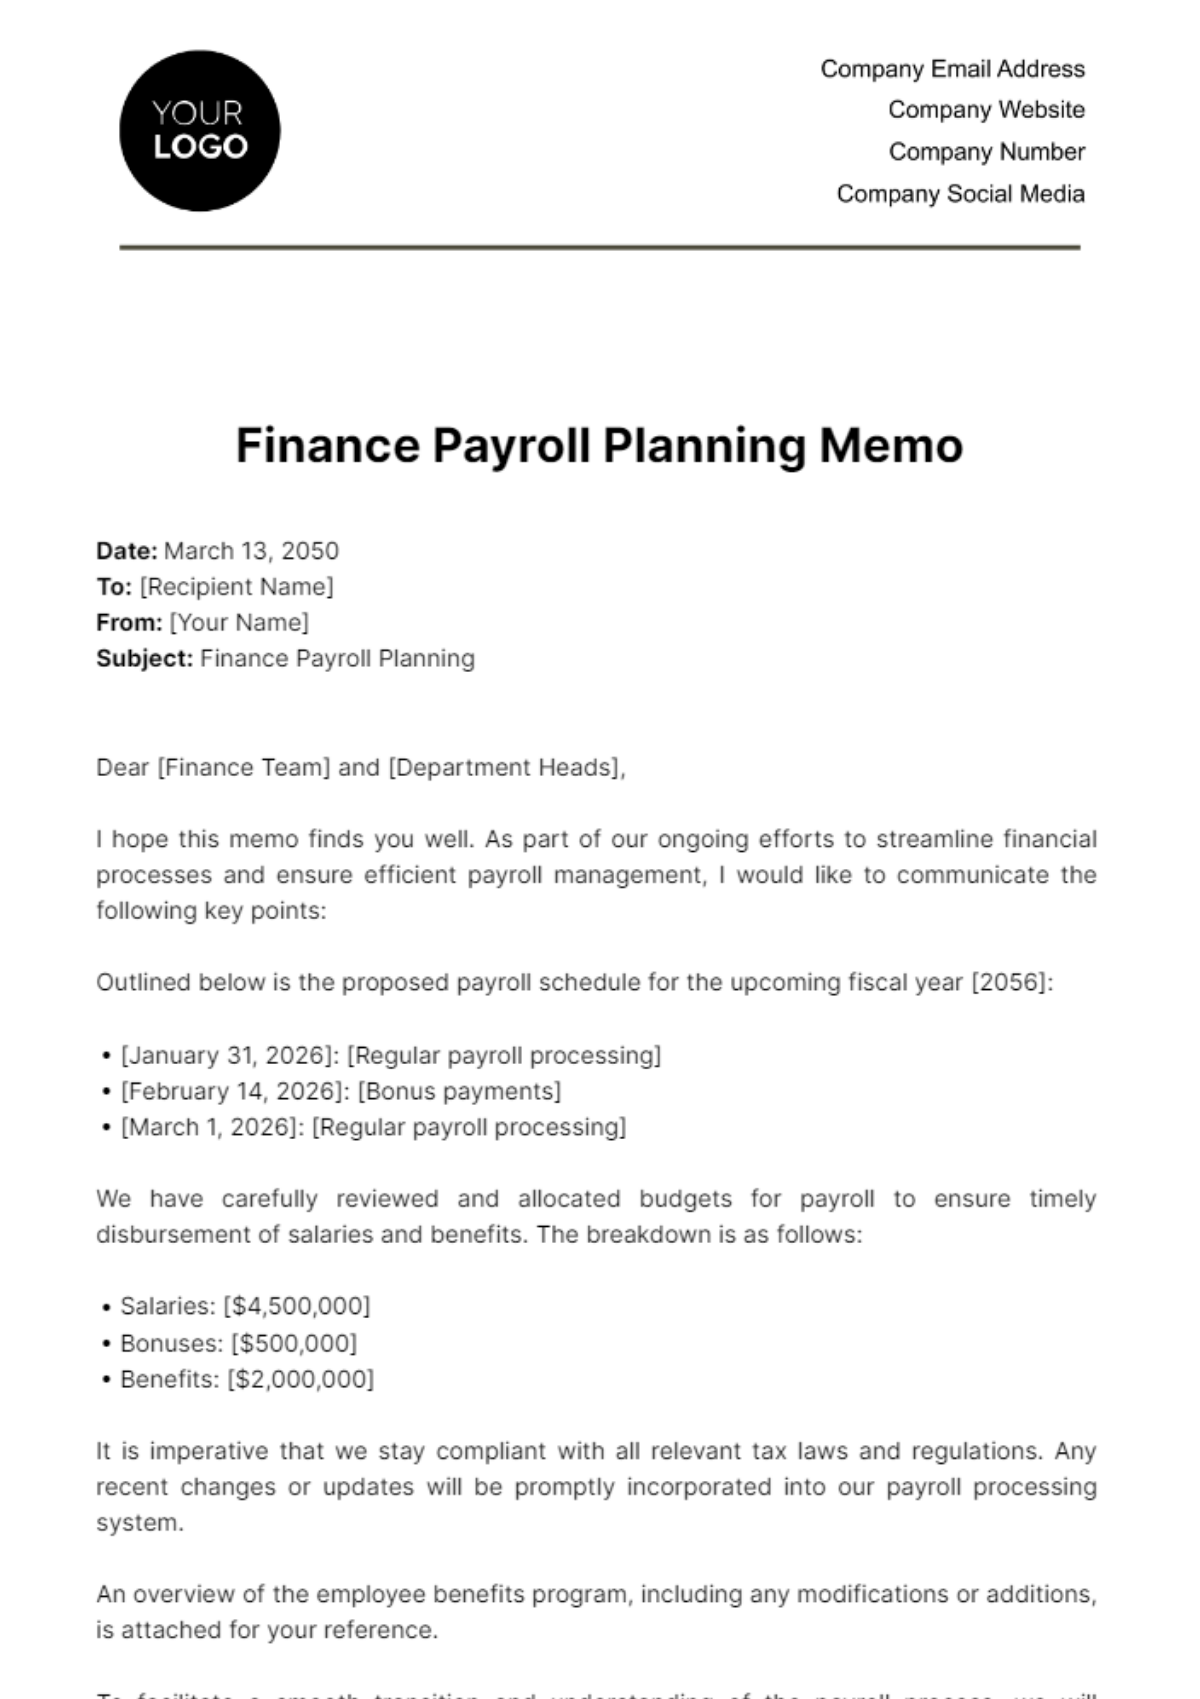 Finance Payroll Planning Memo Template